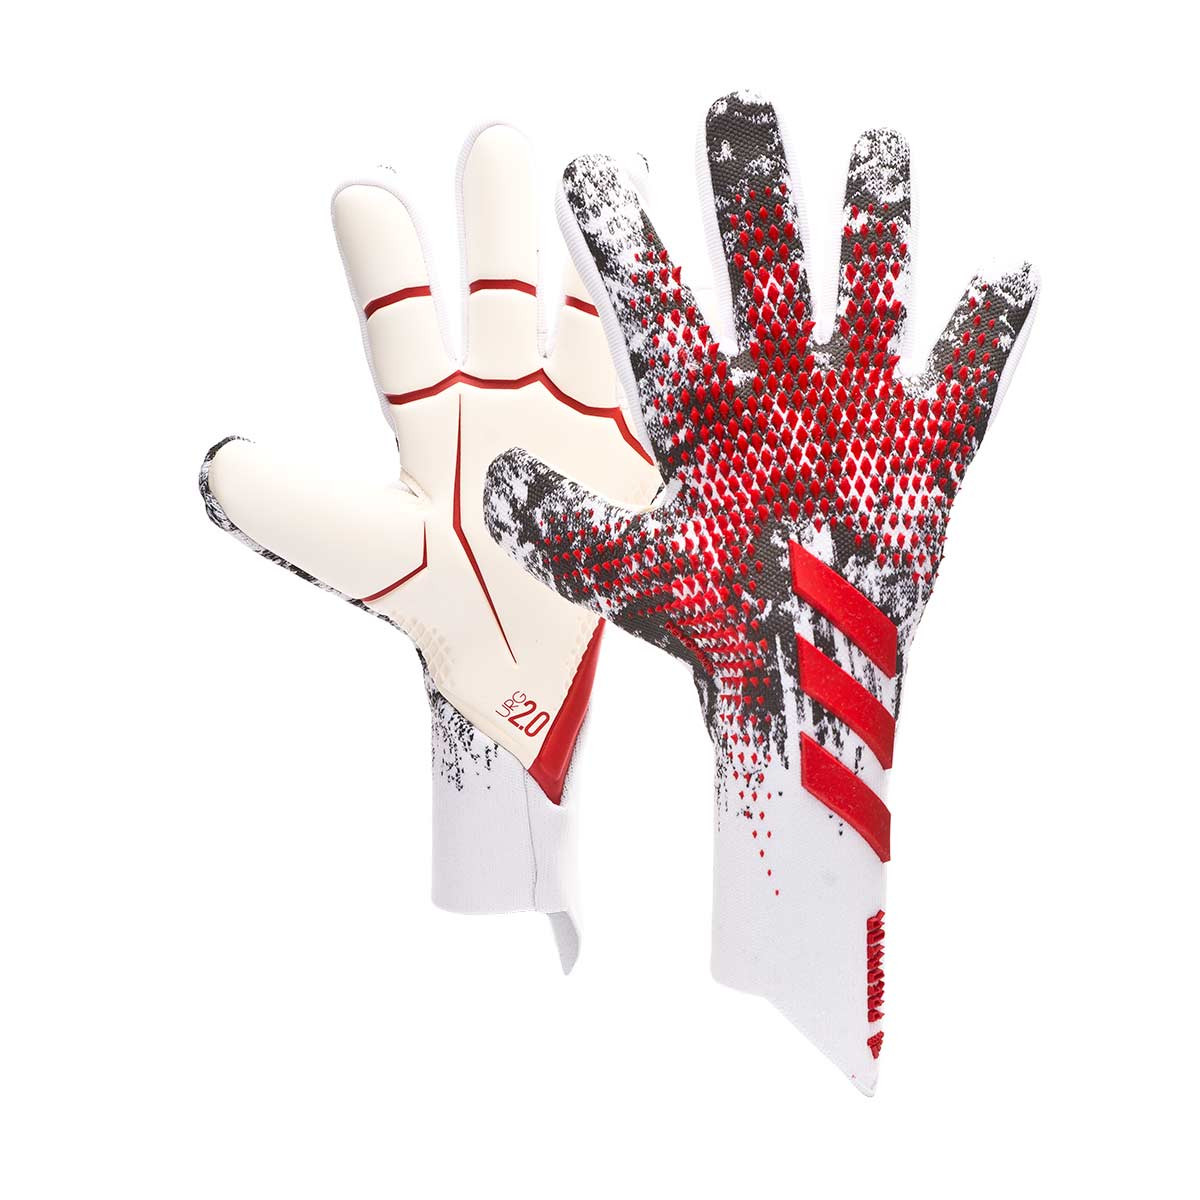 adidas predator pro manuel neuer gloves